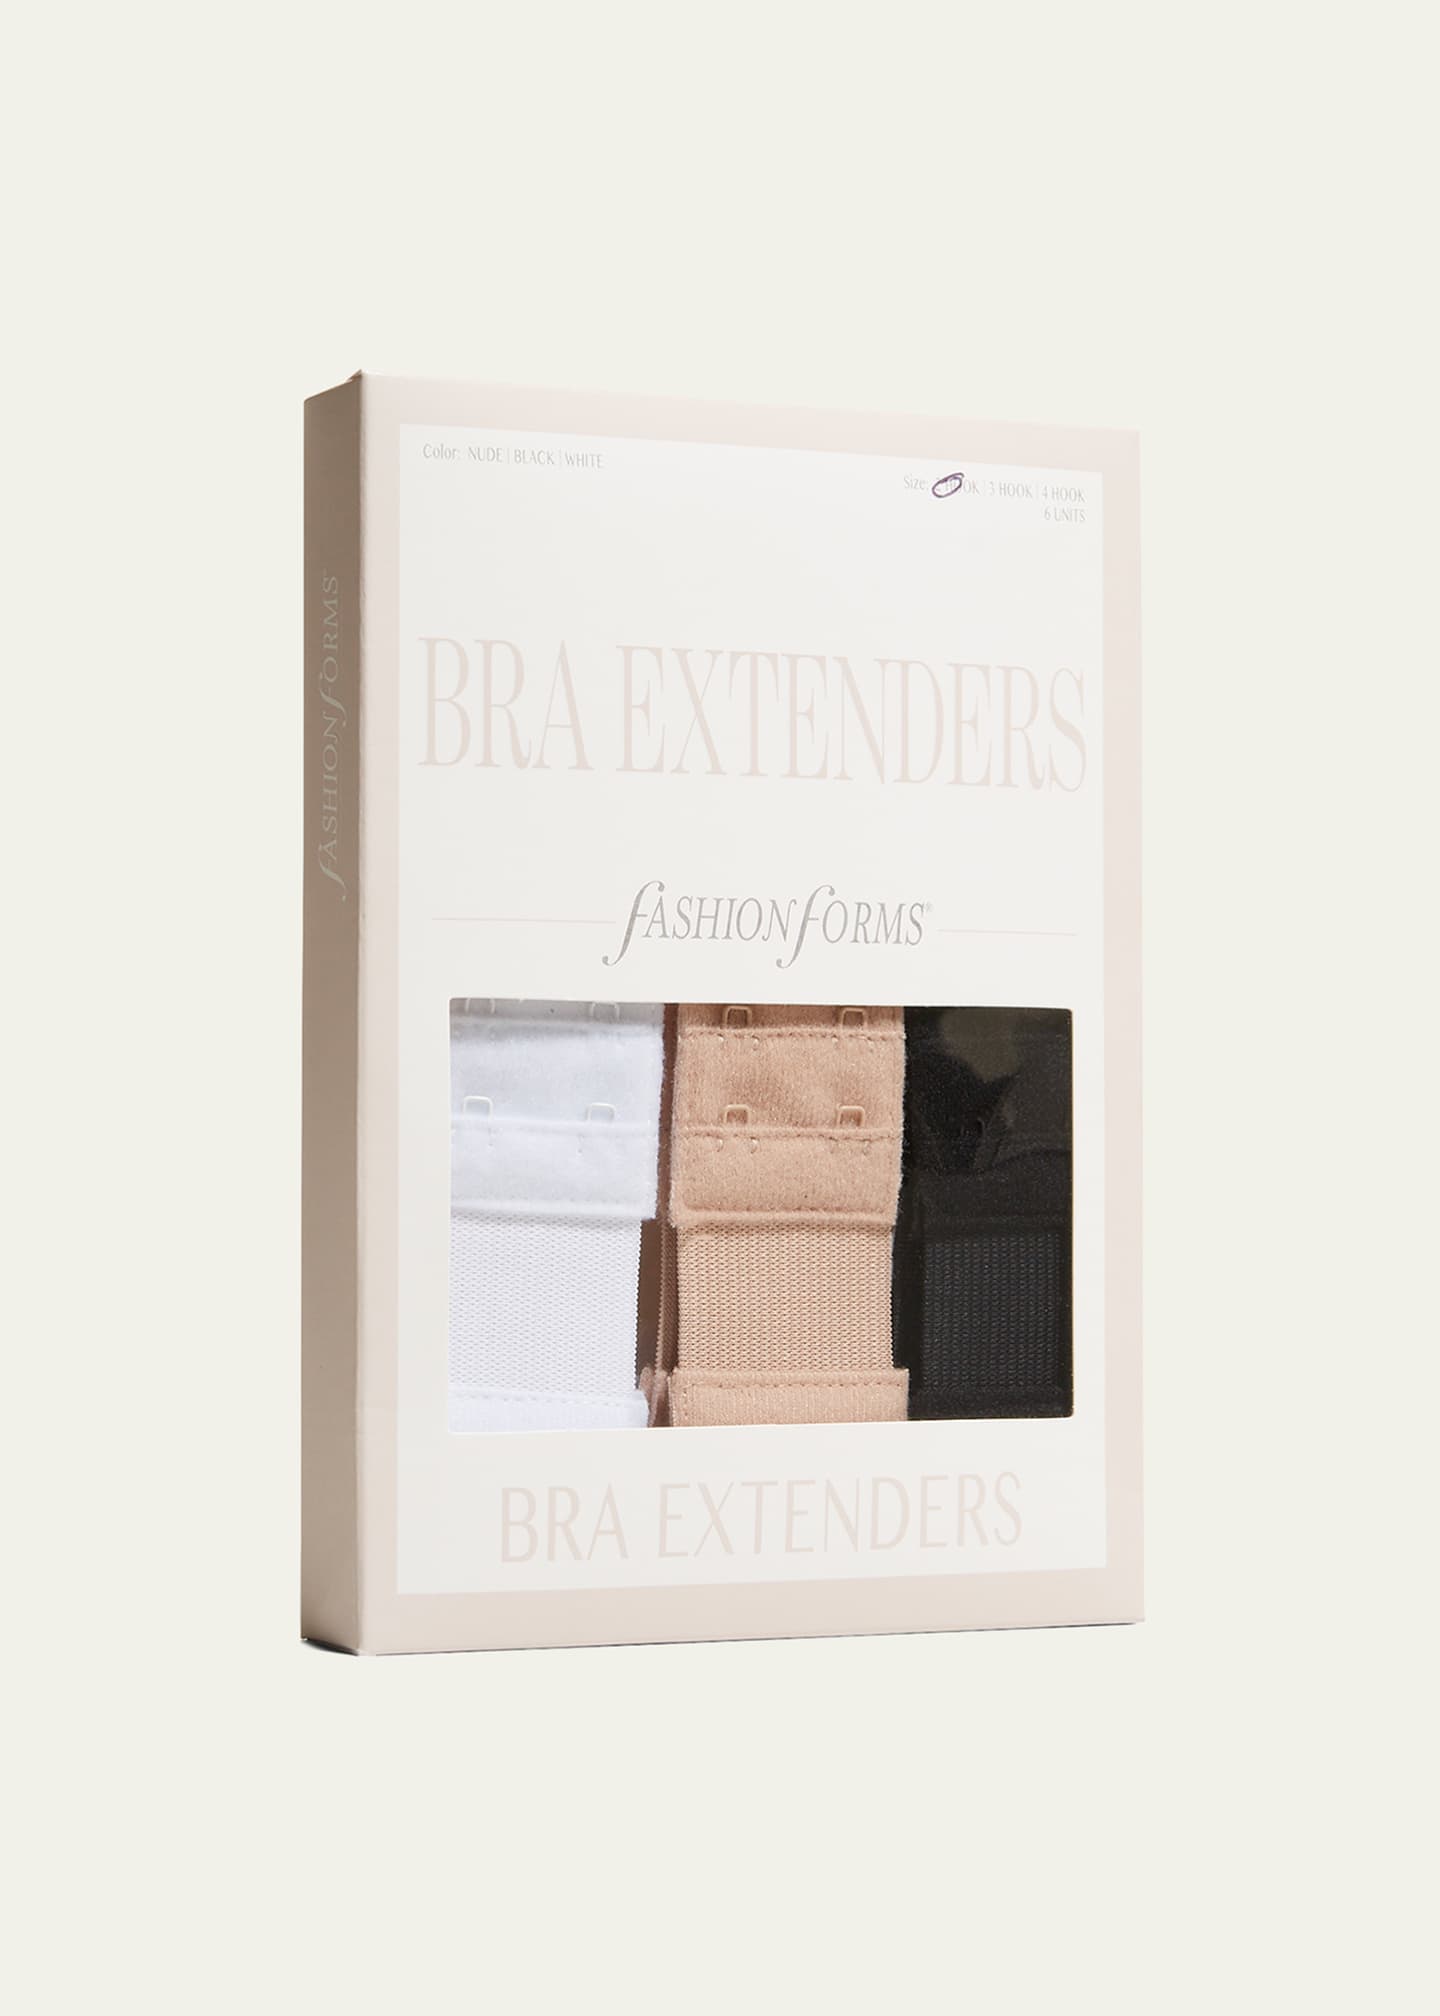 Fashion Forms 2-Hook Bra Extenders in New Packaging - Bergdorf Goodman